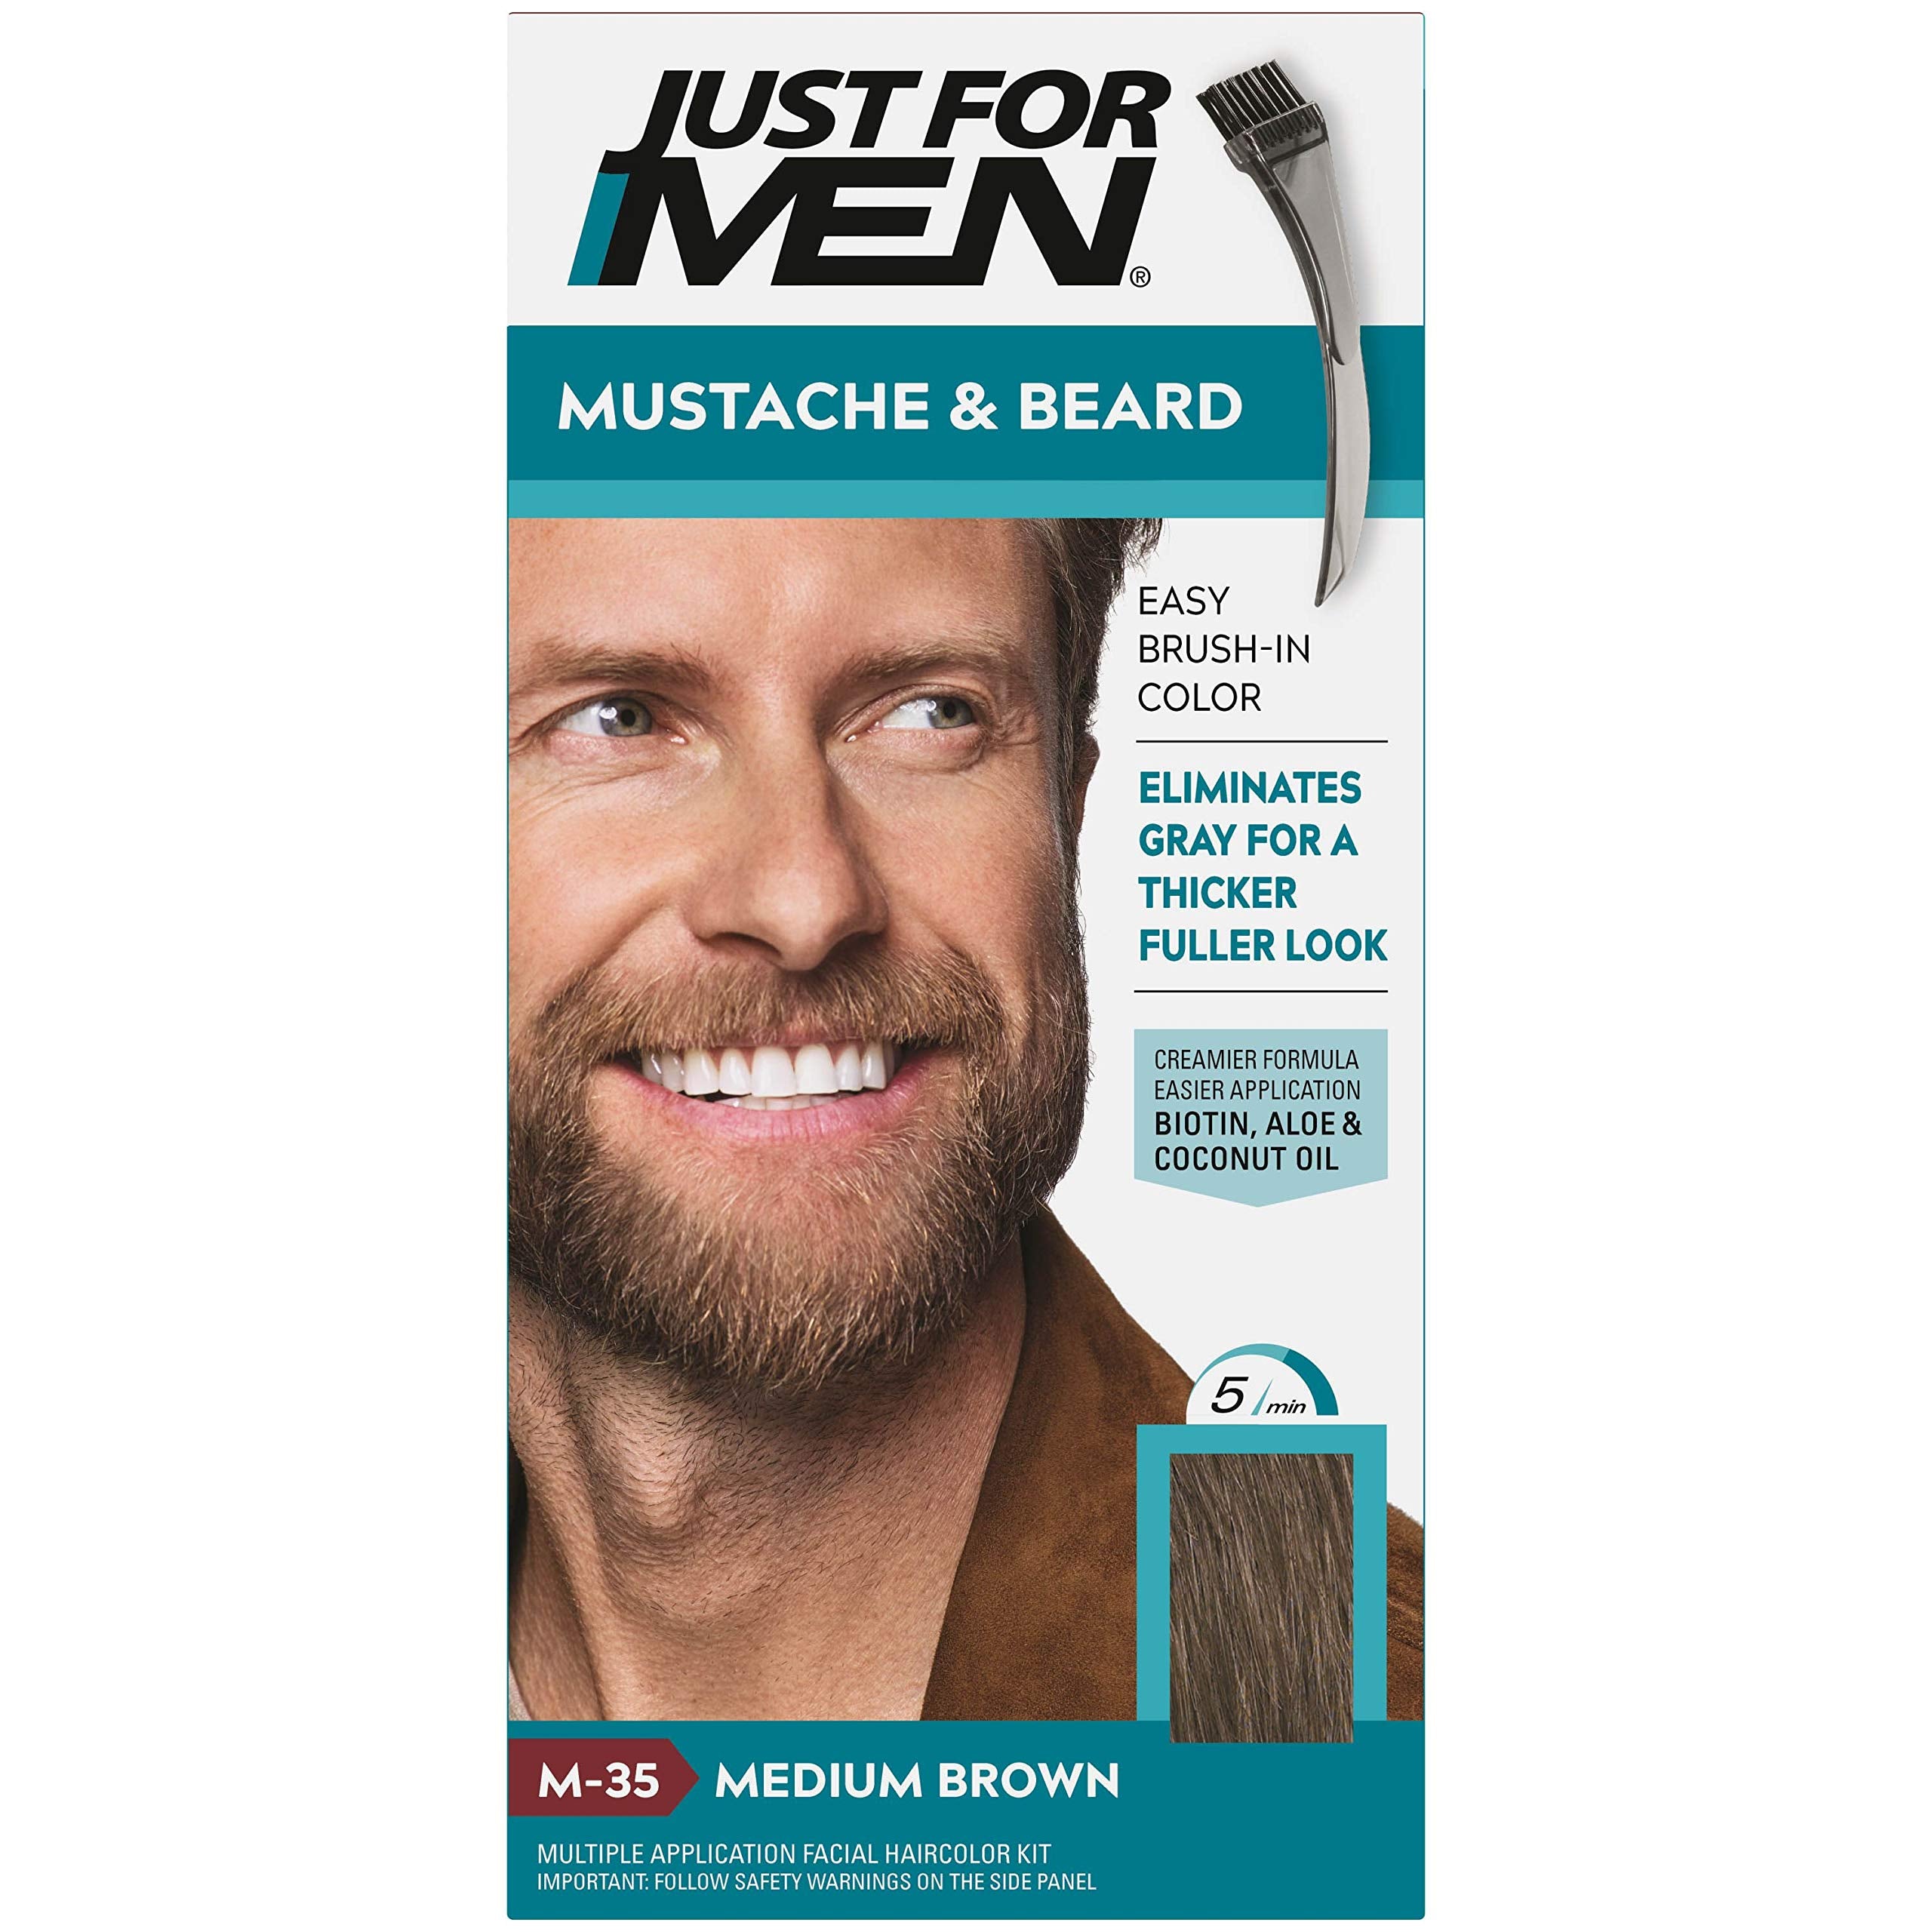 Just for Men Mustache & Beard Color Medium Brown M-35 - 1ct/3pk